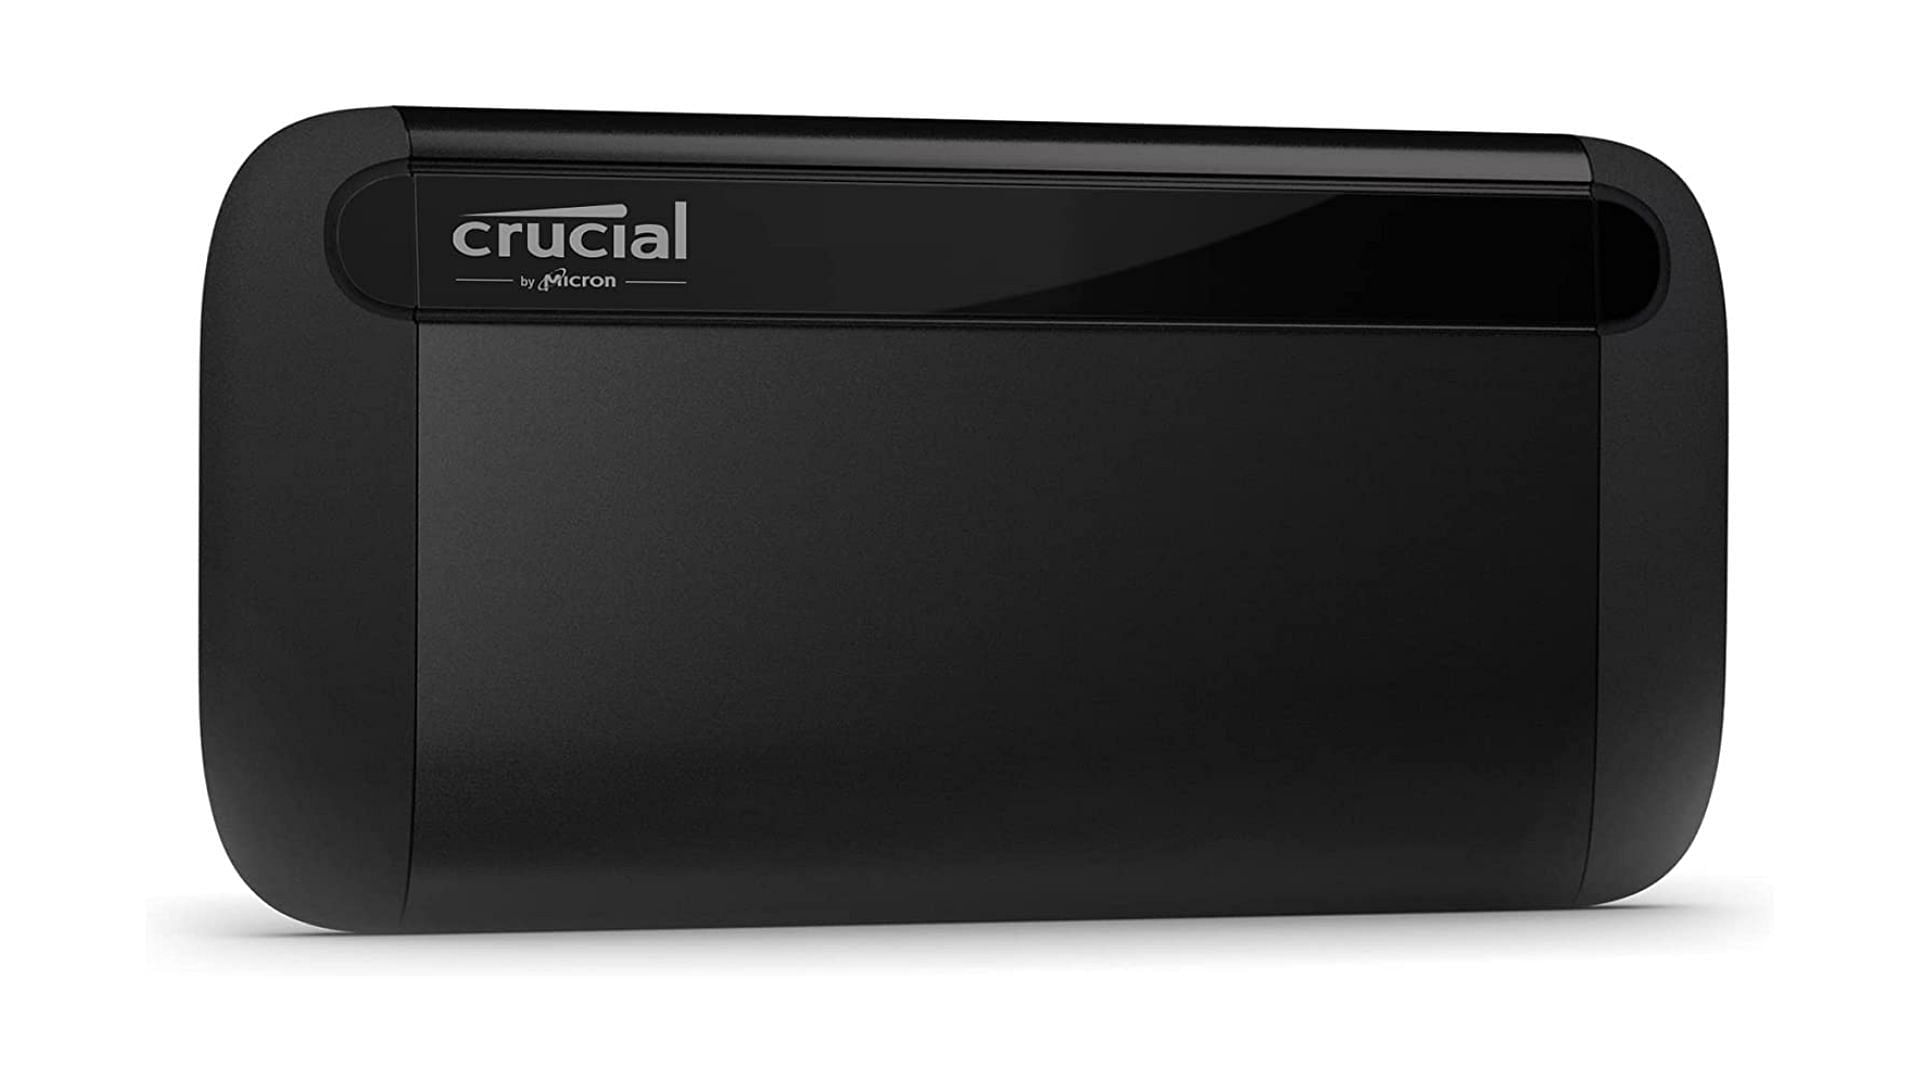 The Crucial X8 1 TB portable SSD (Image via Amazon)